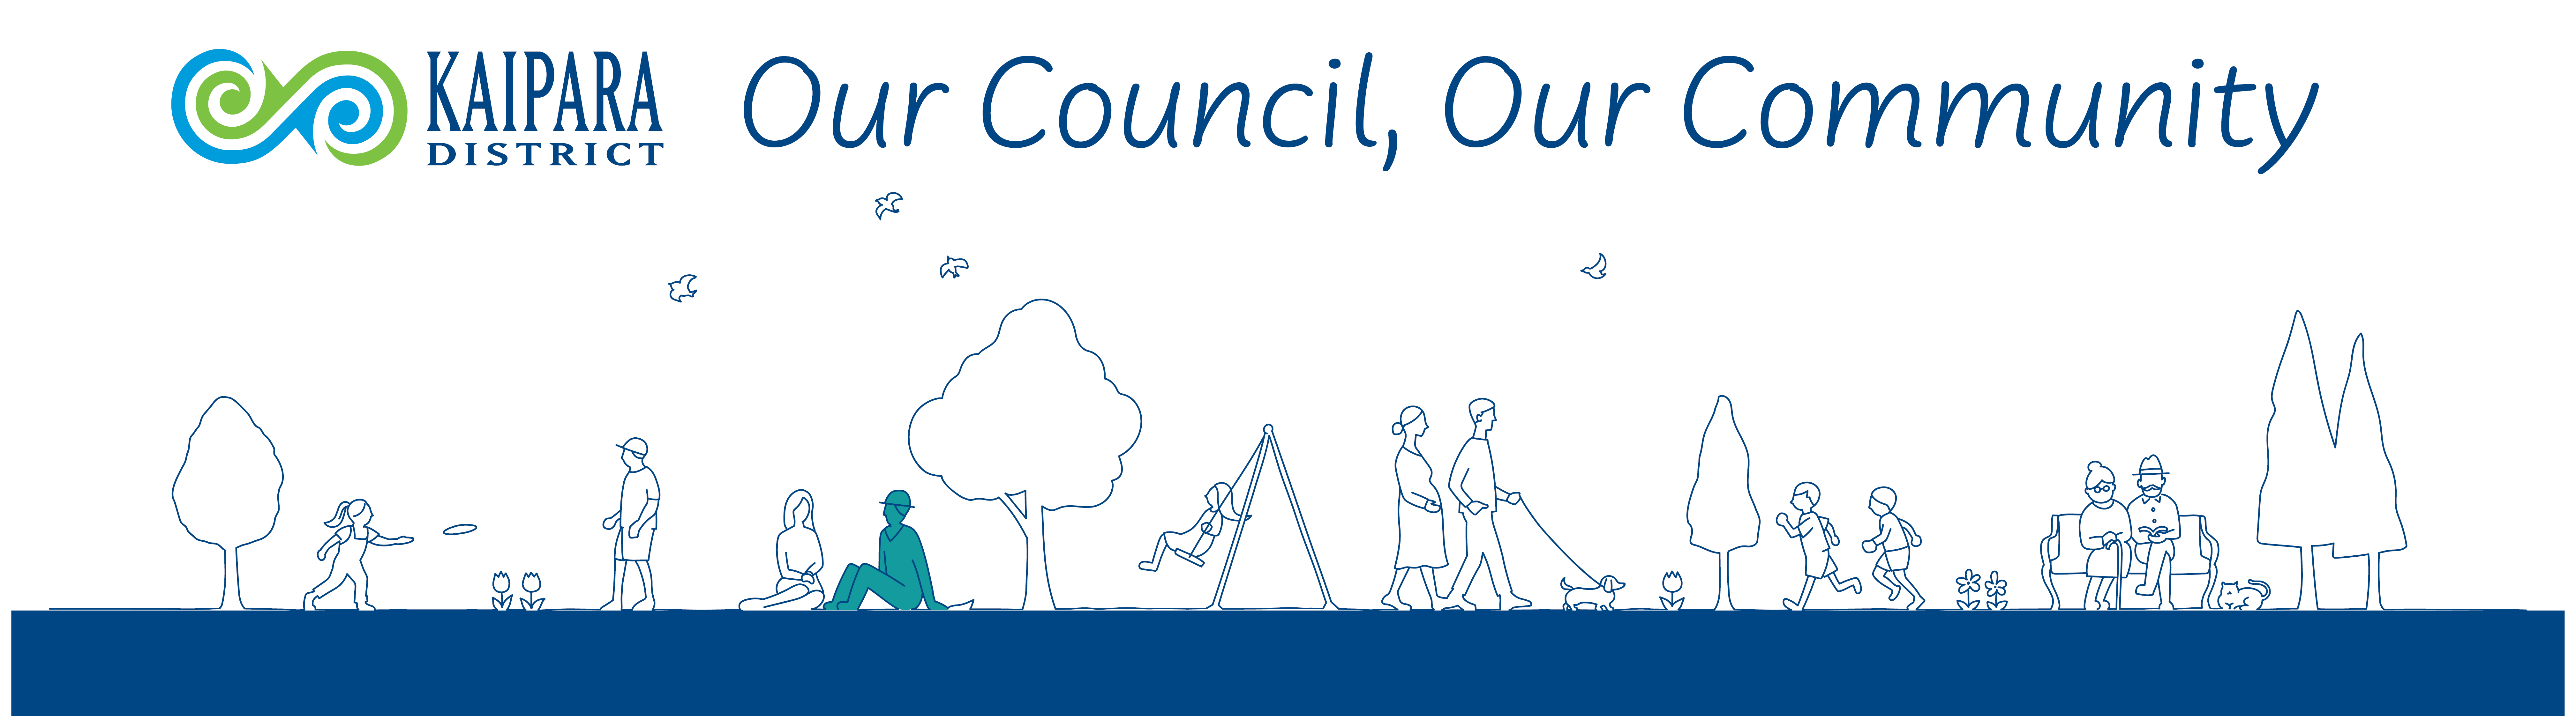 Our Council, Our Community - 